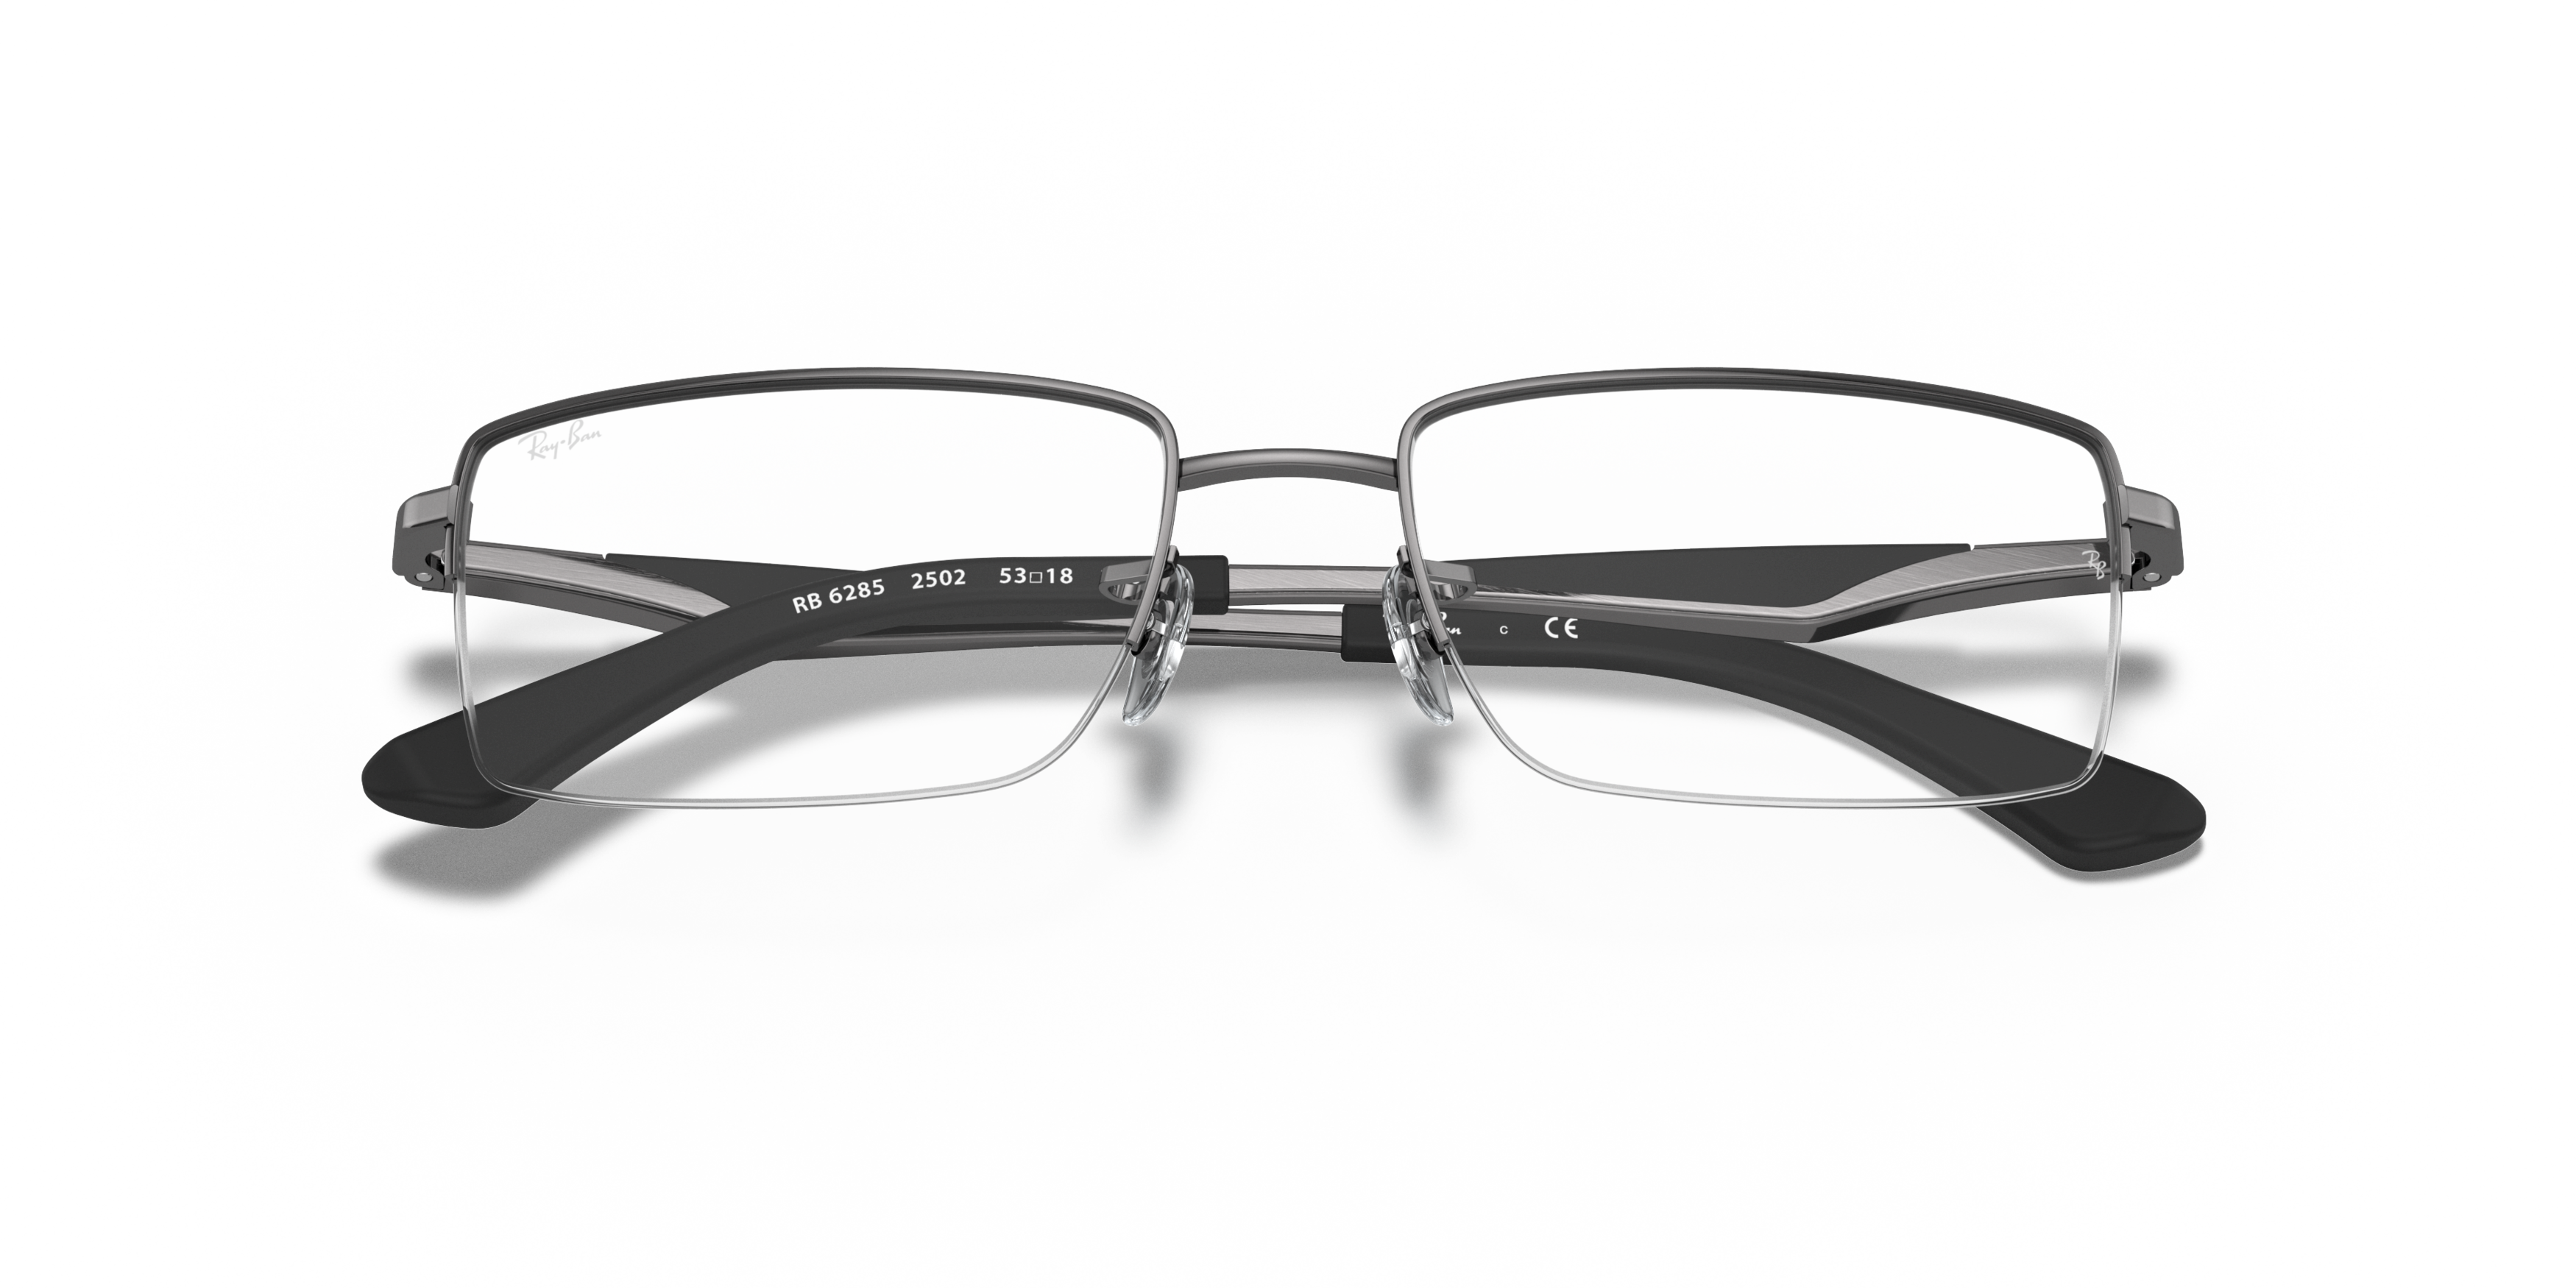 Folded Ray-Ban RX 6285 Glasses Transparent / Grey